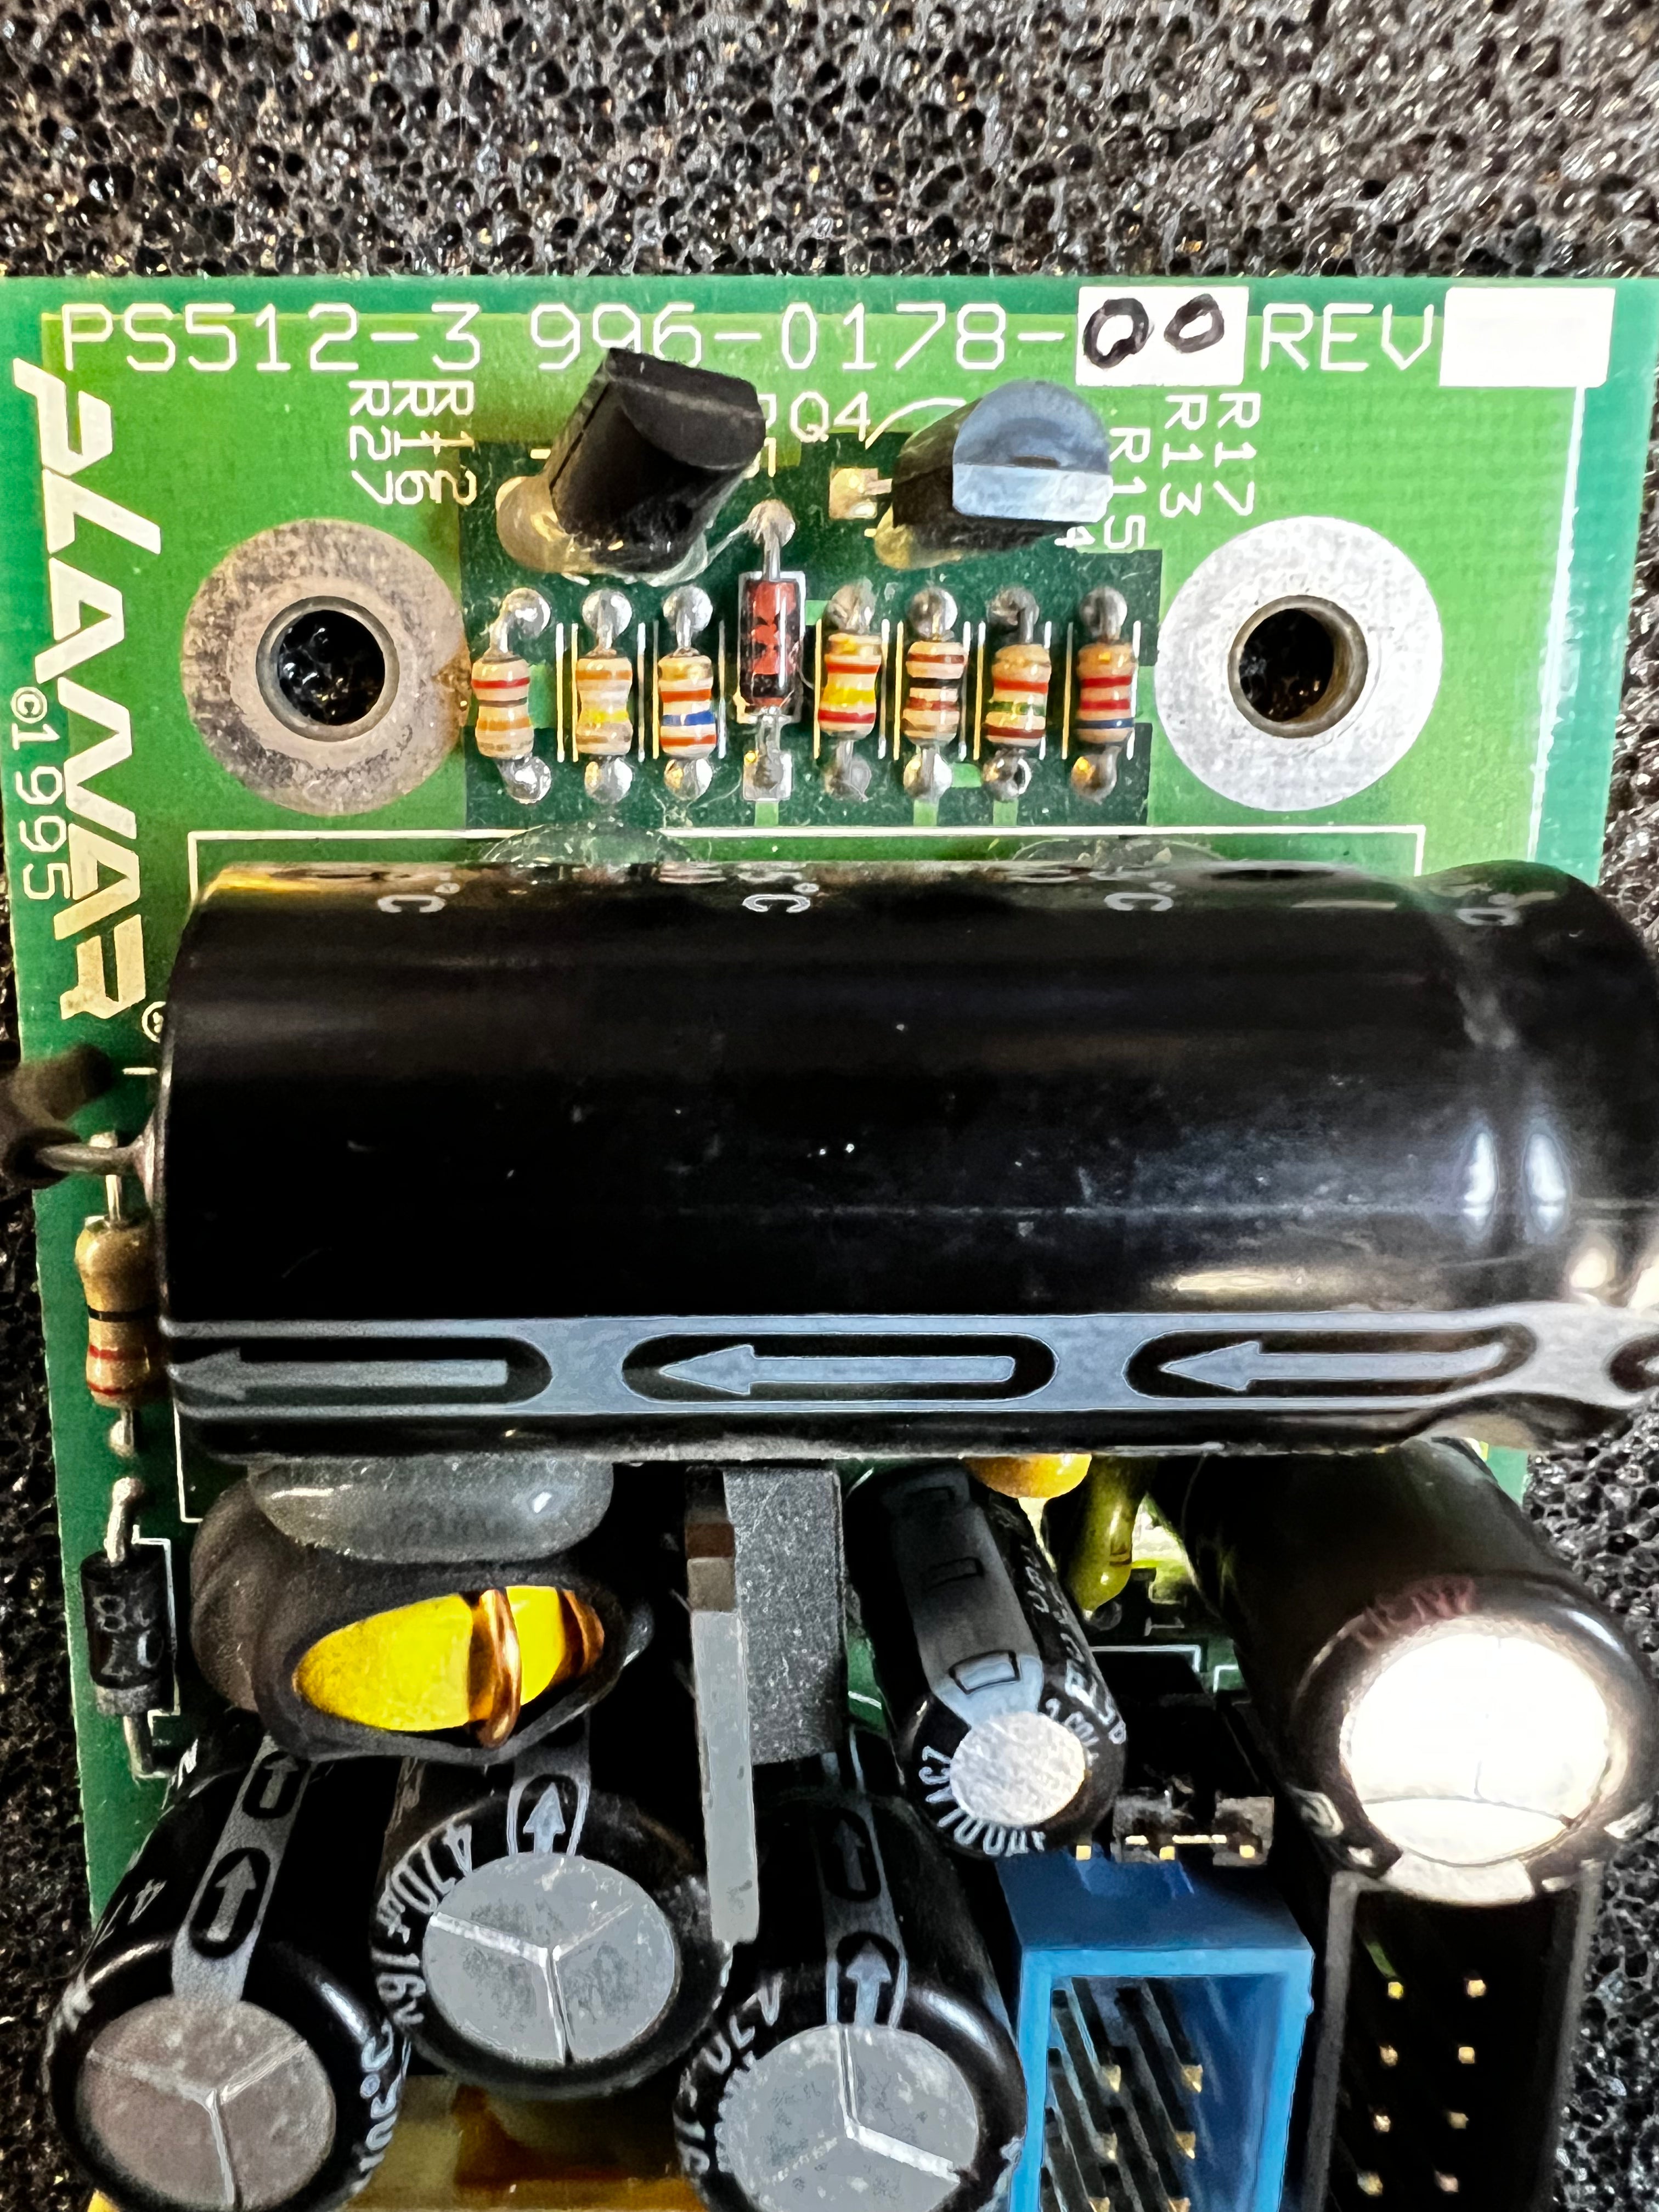 Planar DC Power supply PS512-3 (Rare)